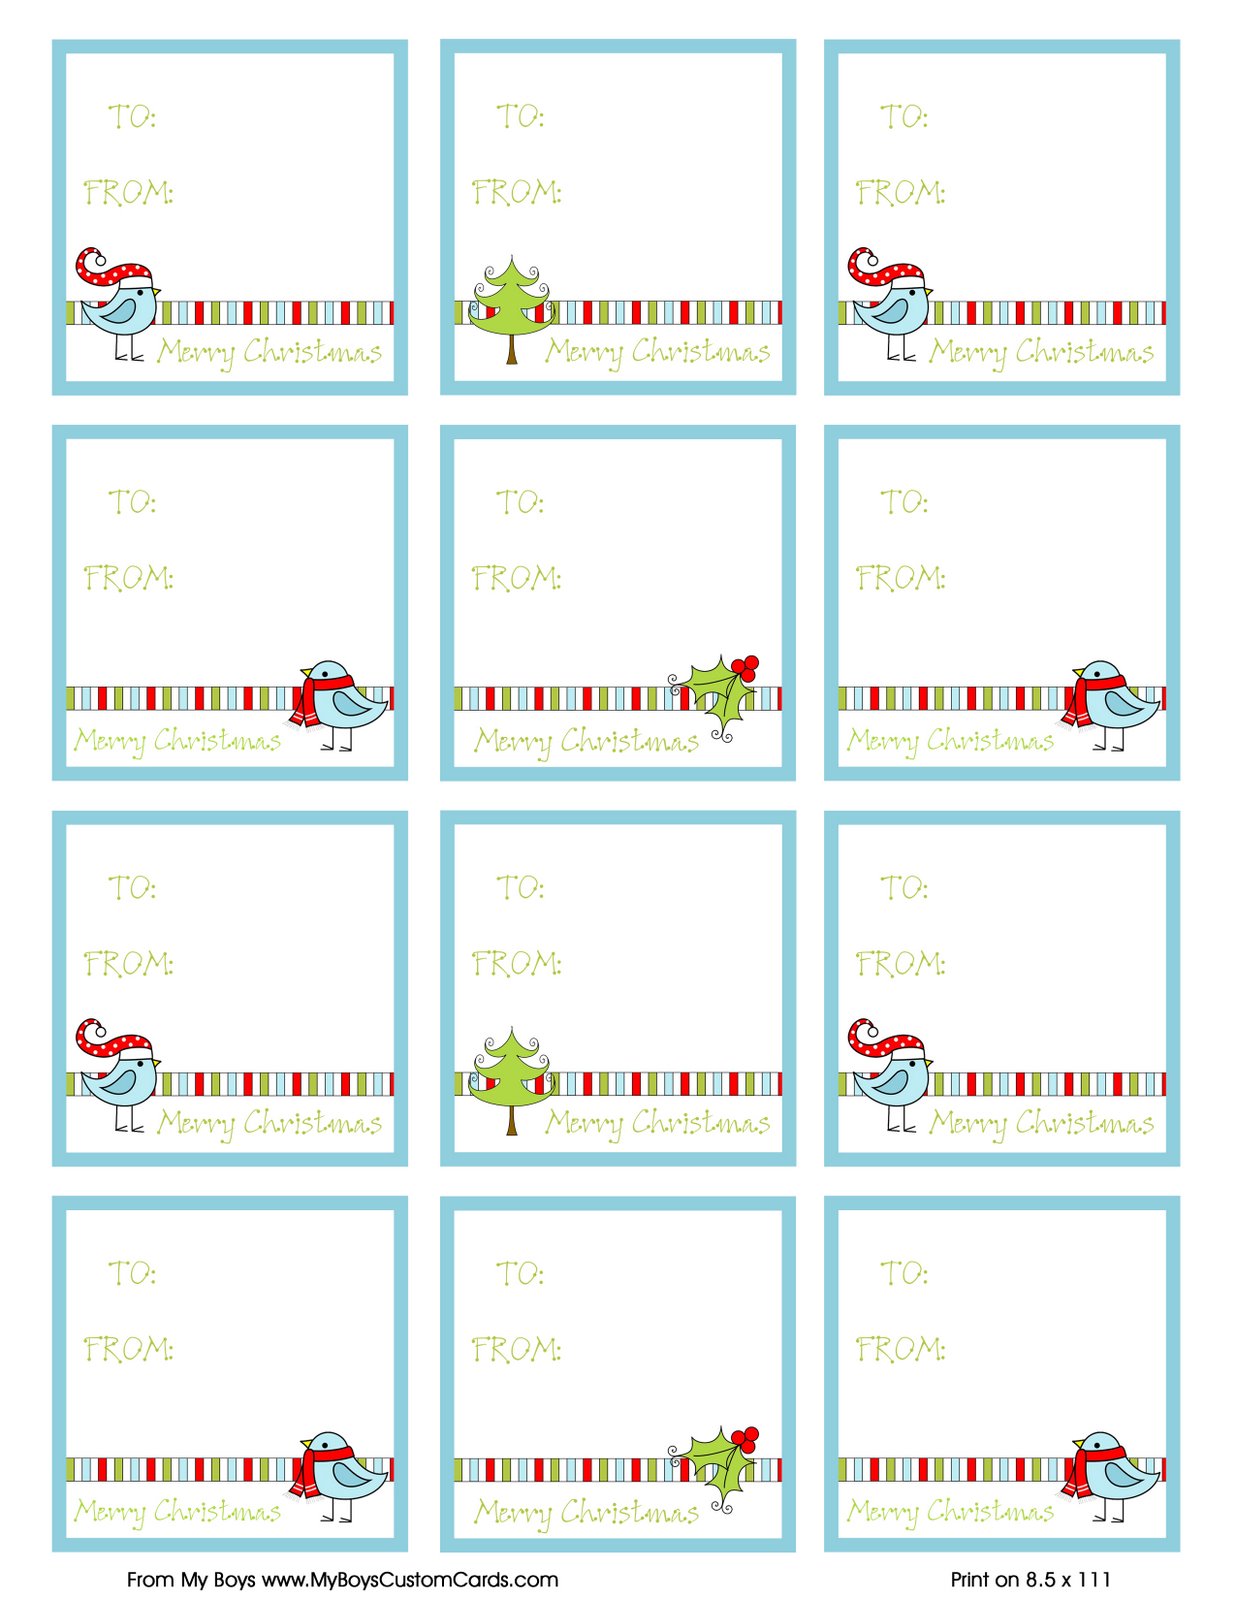 16 FREE Printable Christmas Tags - The Organised Housewife